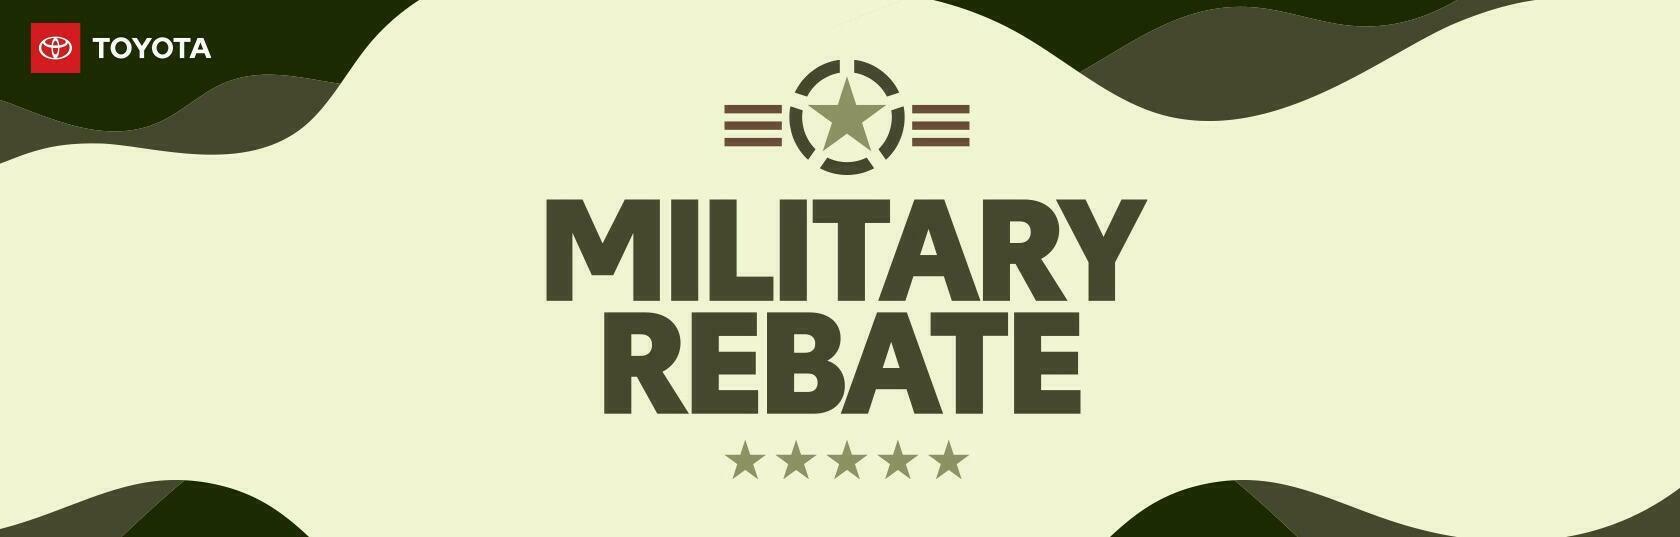 military-rebate-program-hendrick-toyota-apex-near-durham-nc